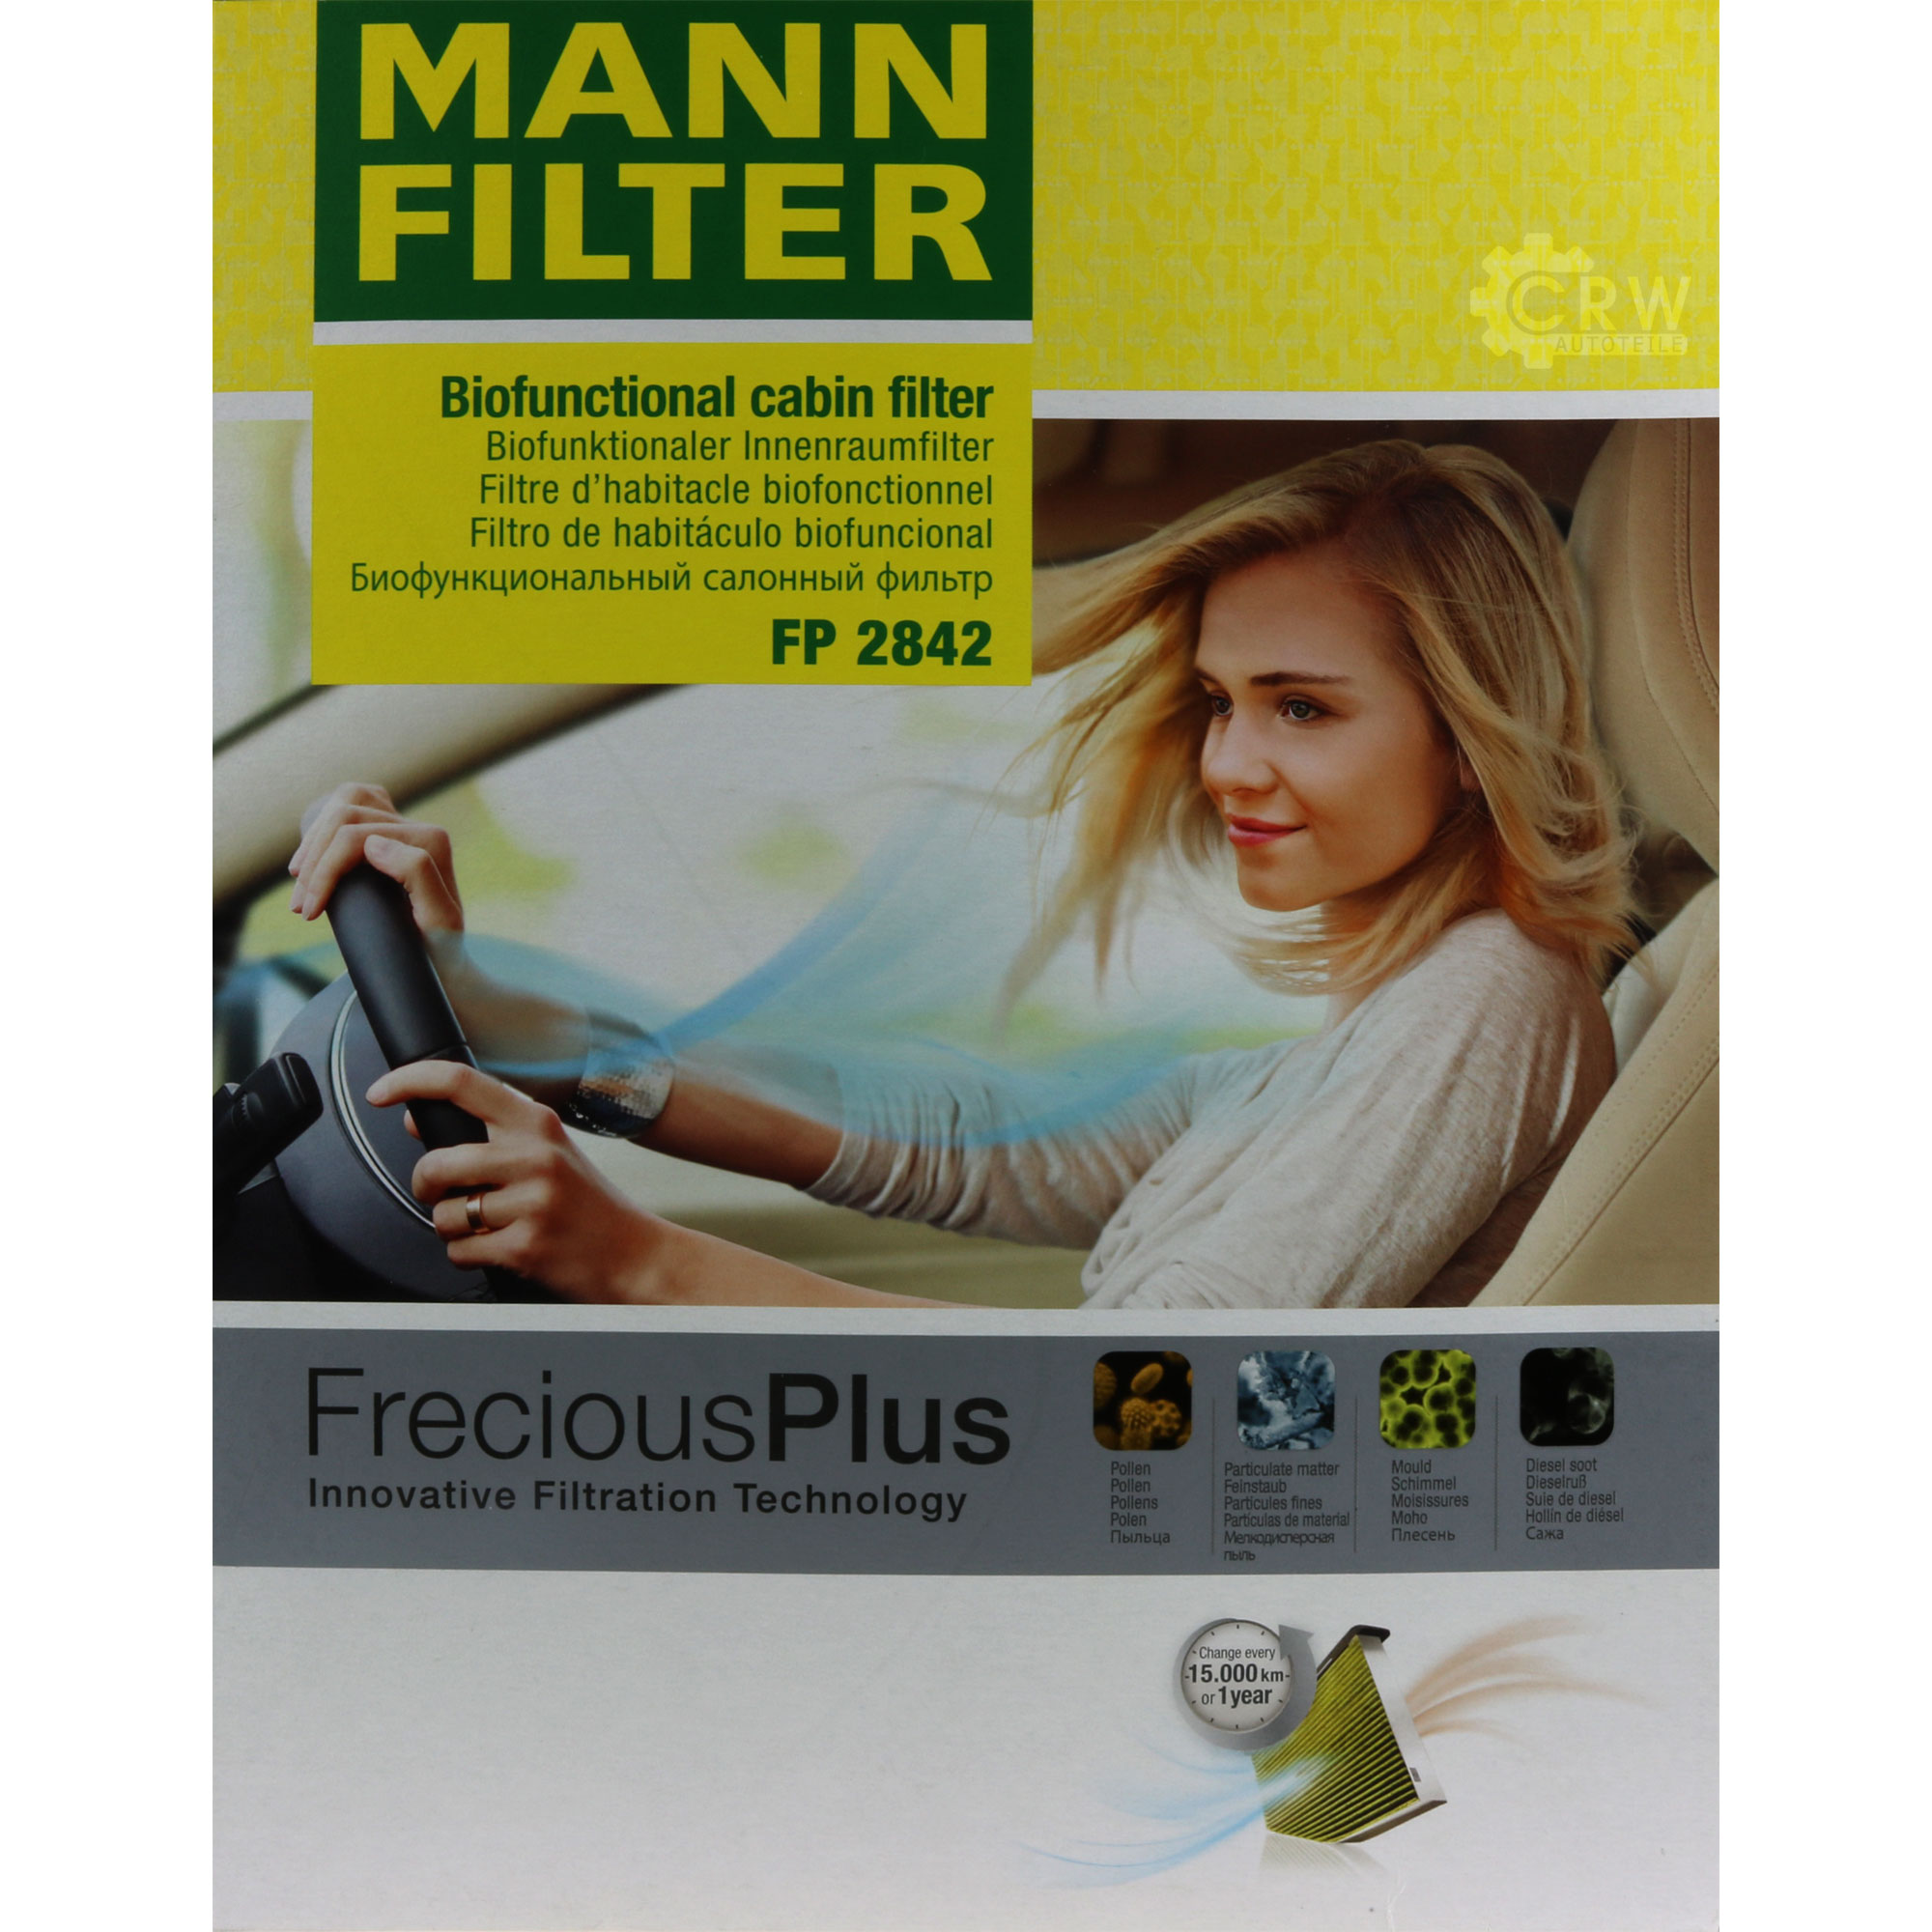 MANN-Filter Innenraumfilter Biofunctional für Allergiker FP 2842